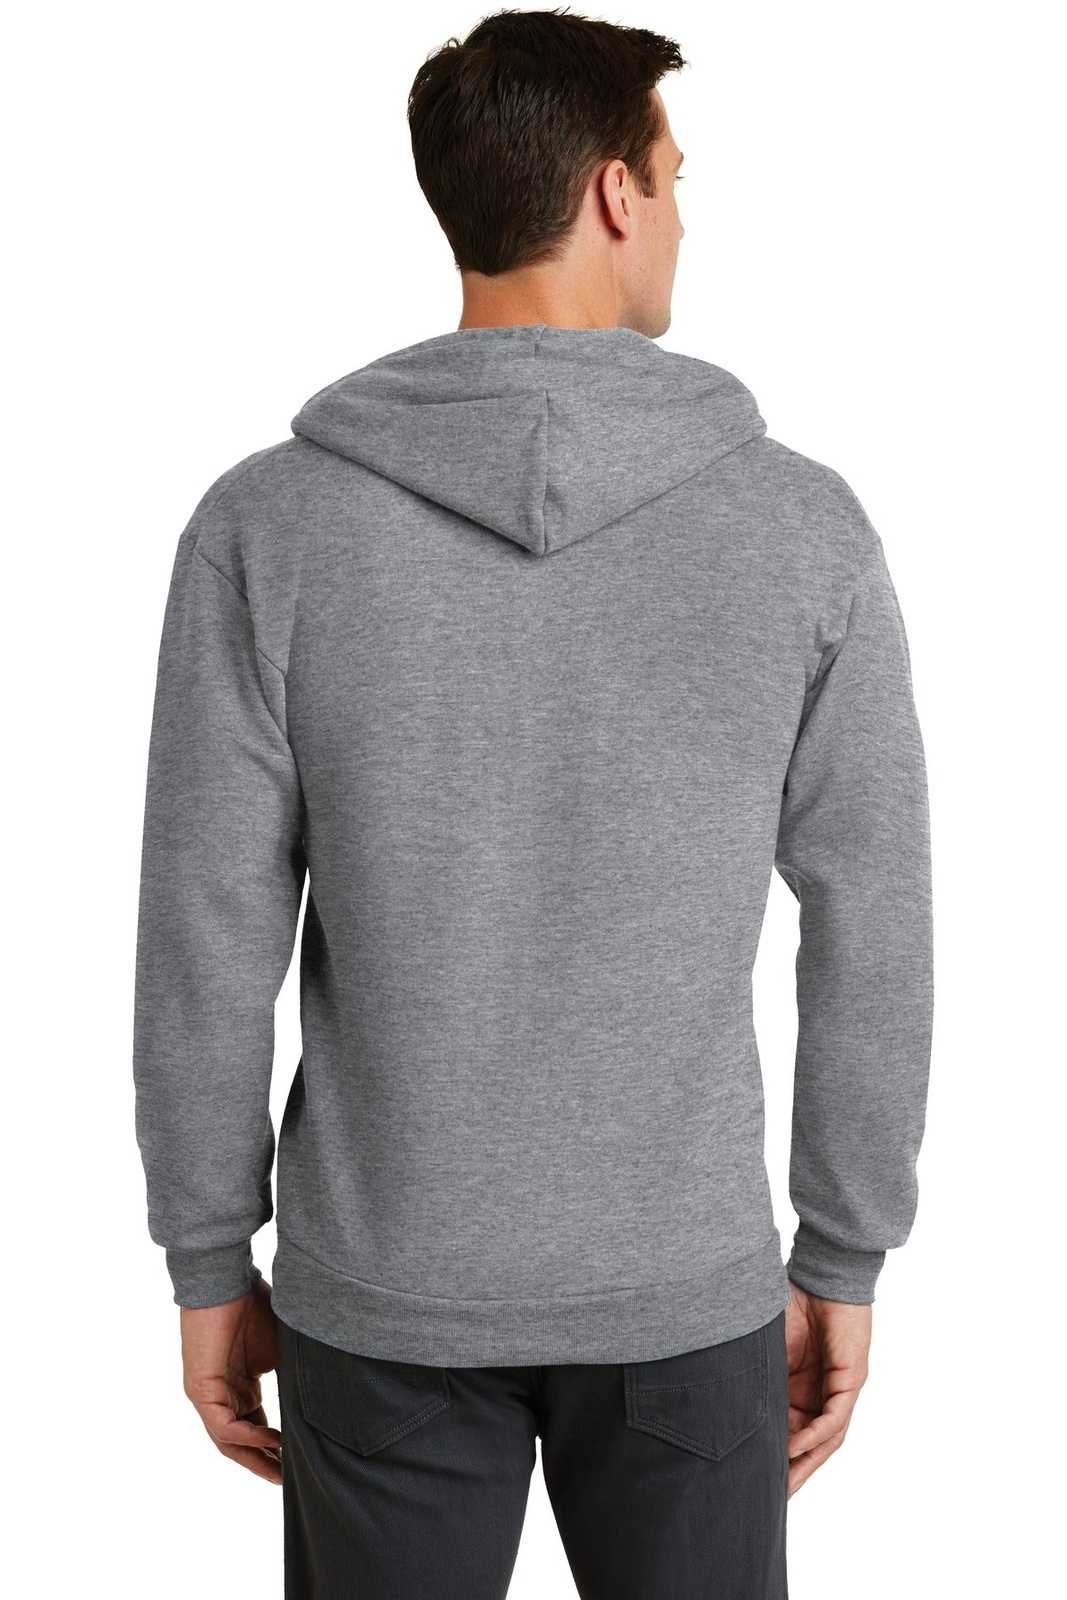 Port & Company PC78ZH Core Fleece Full-Zip Hooded Sweatshirt - Athletic Heather - HIT a Double - 1